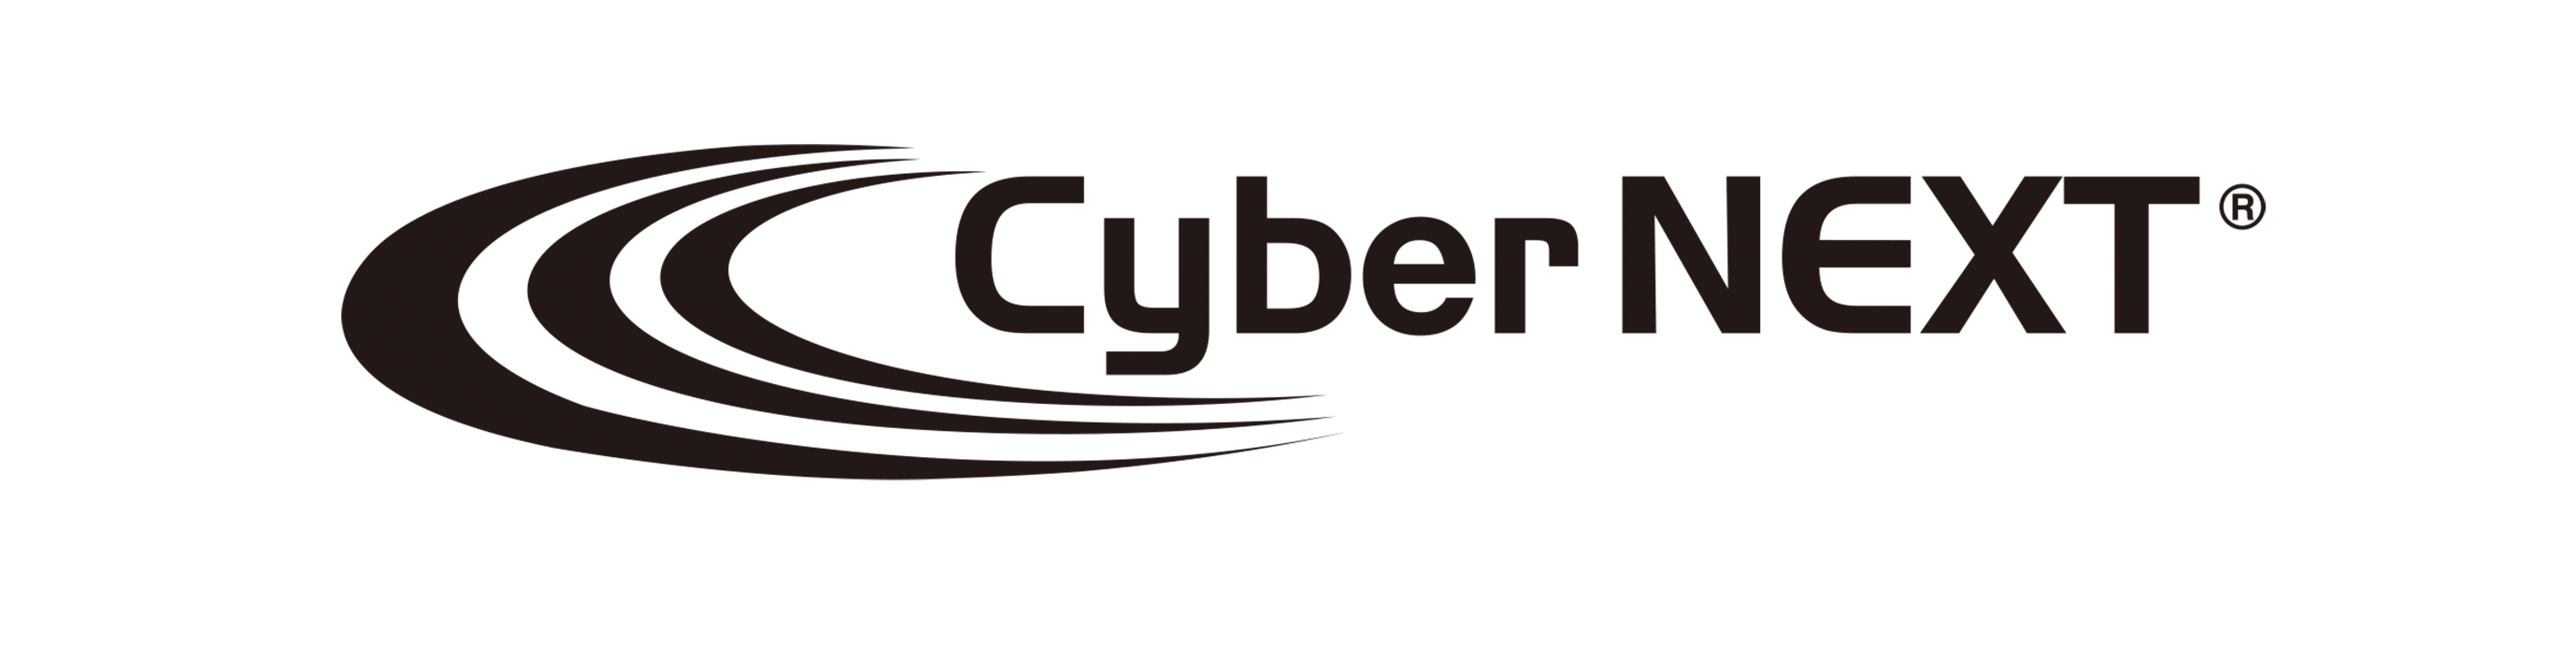 CyberNEXTサイトロゴ